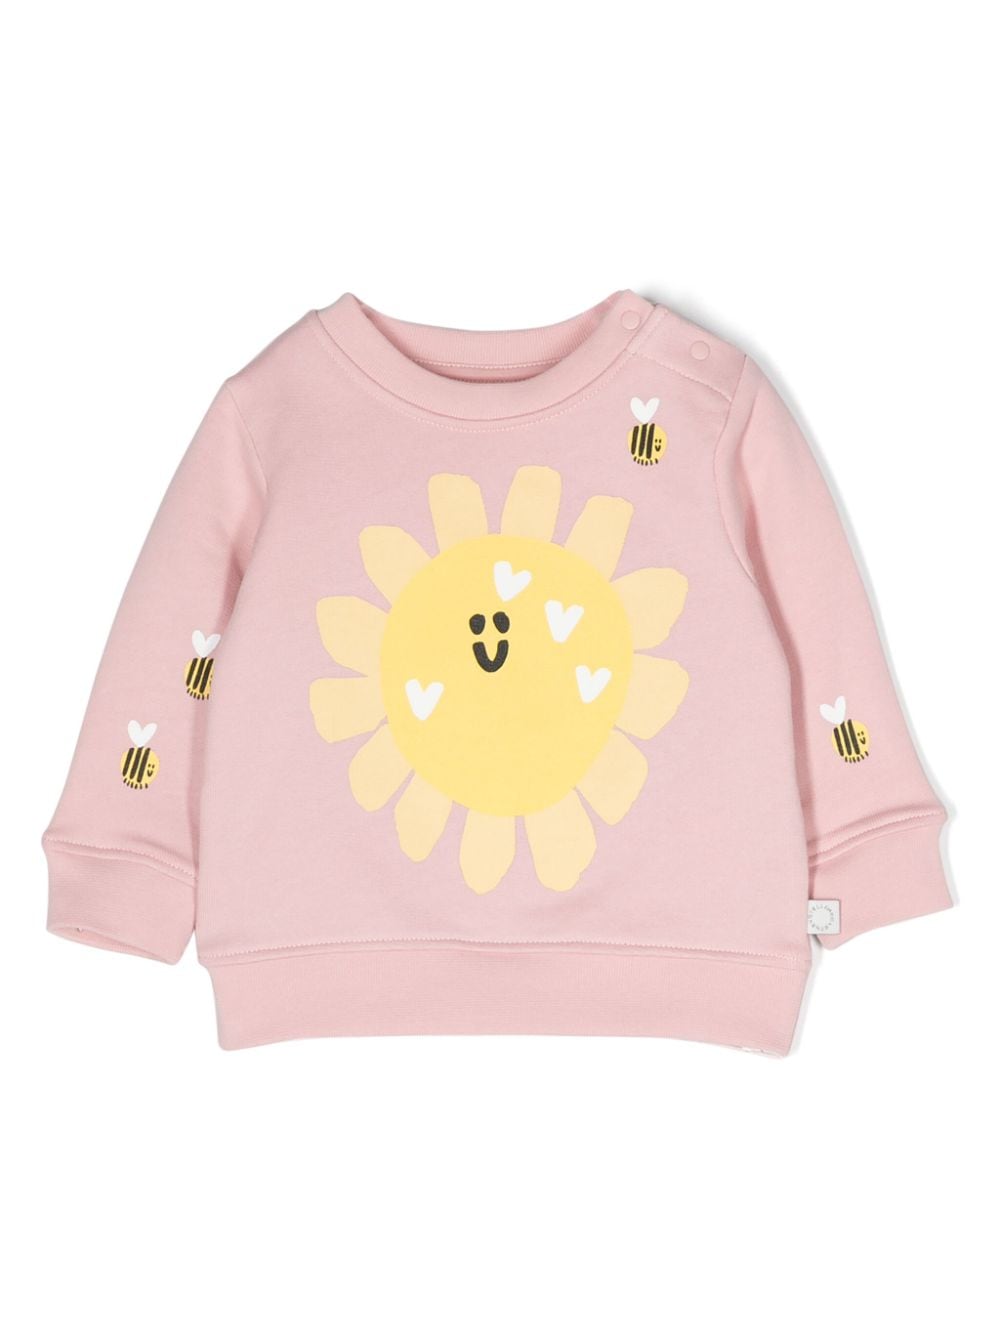 Stella McCartney Kids Girls Graphic Crew Neck Sweatshirt Grey Size 4 - Shop  Linda's Stuff